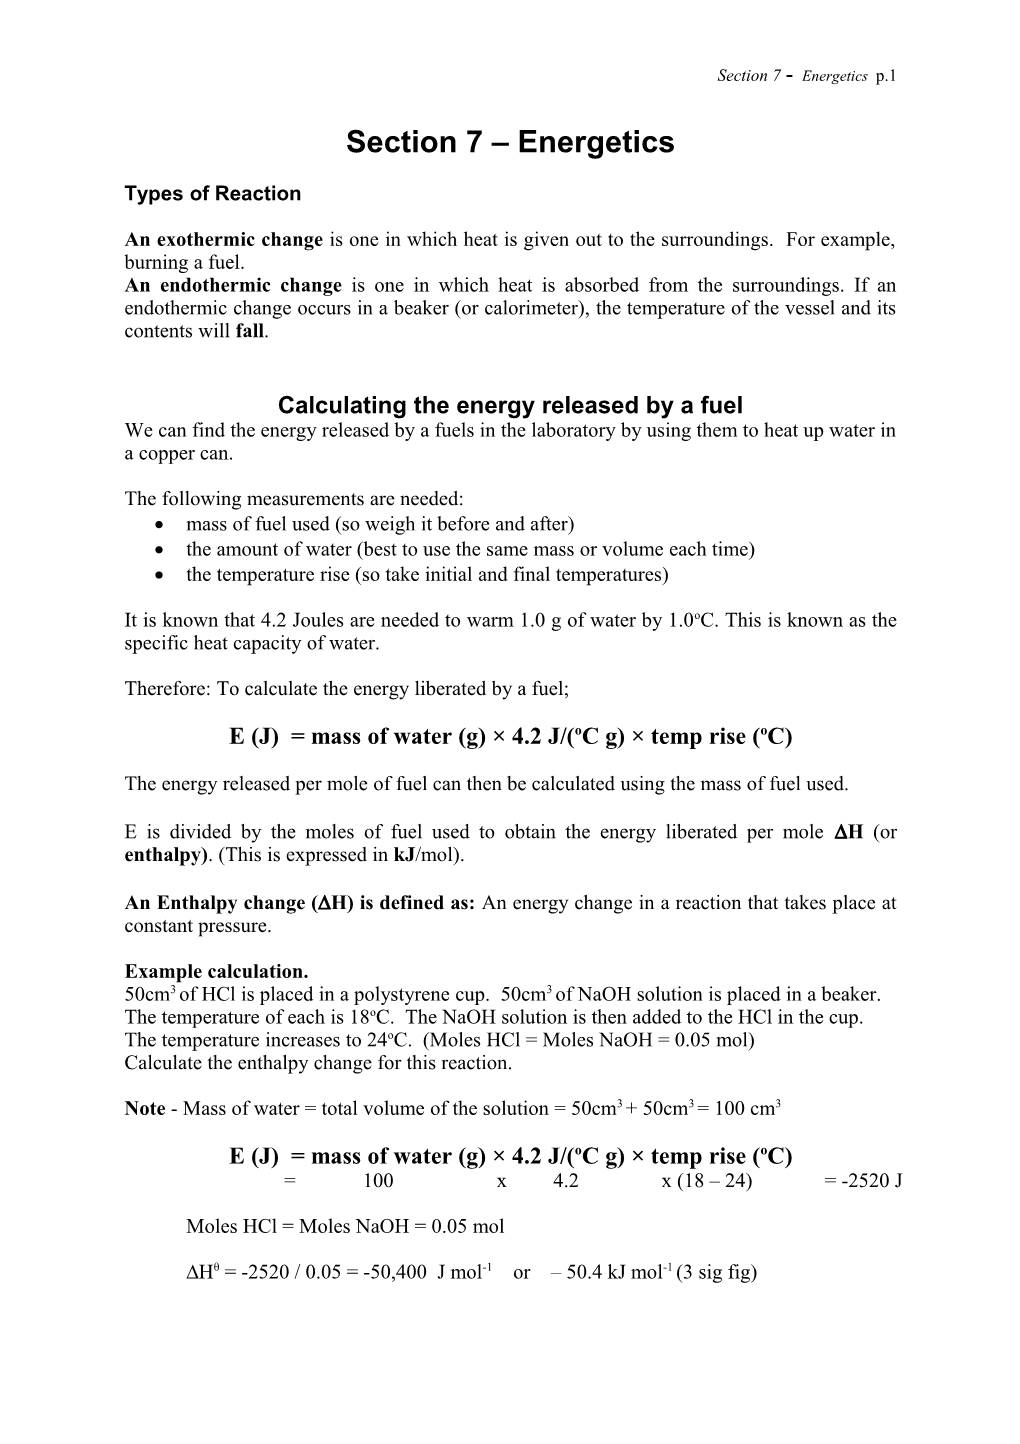 Section 7 Energetics